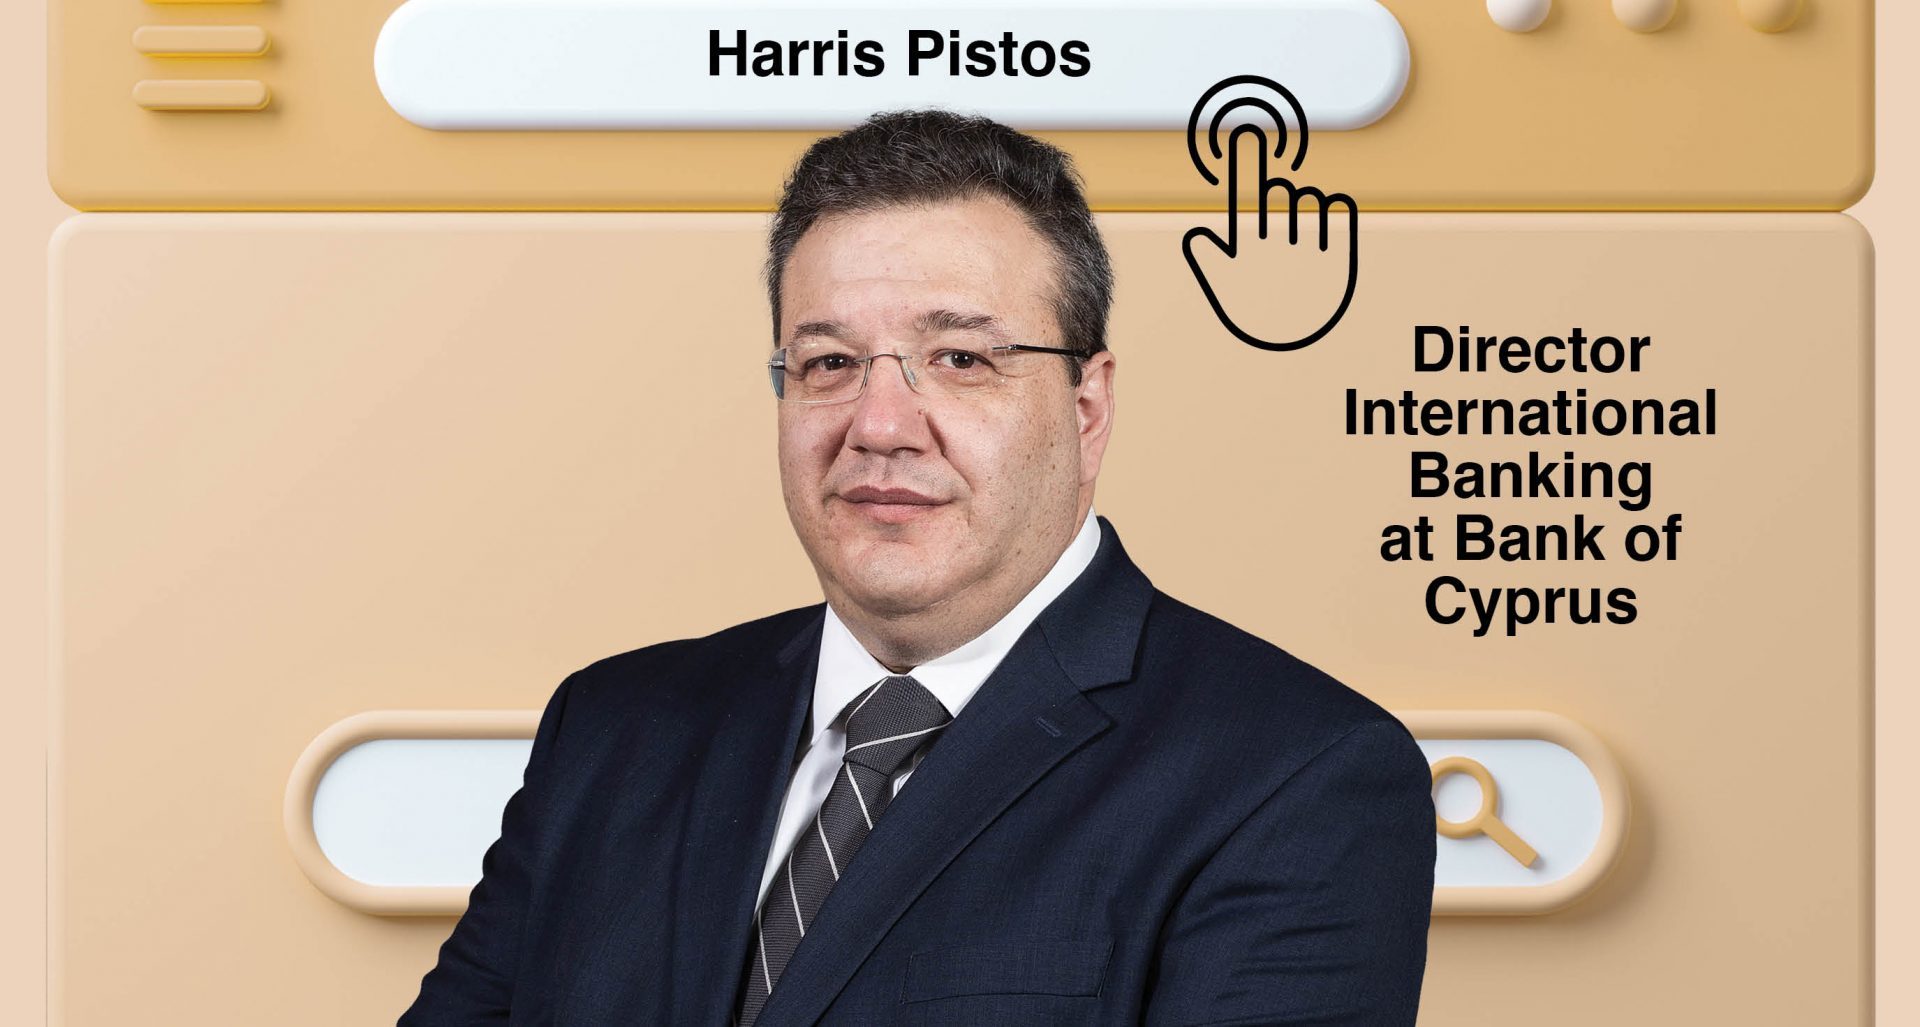 Harris Pitsos. Director International Banking at Bank of Cyprus